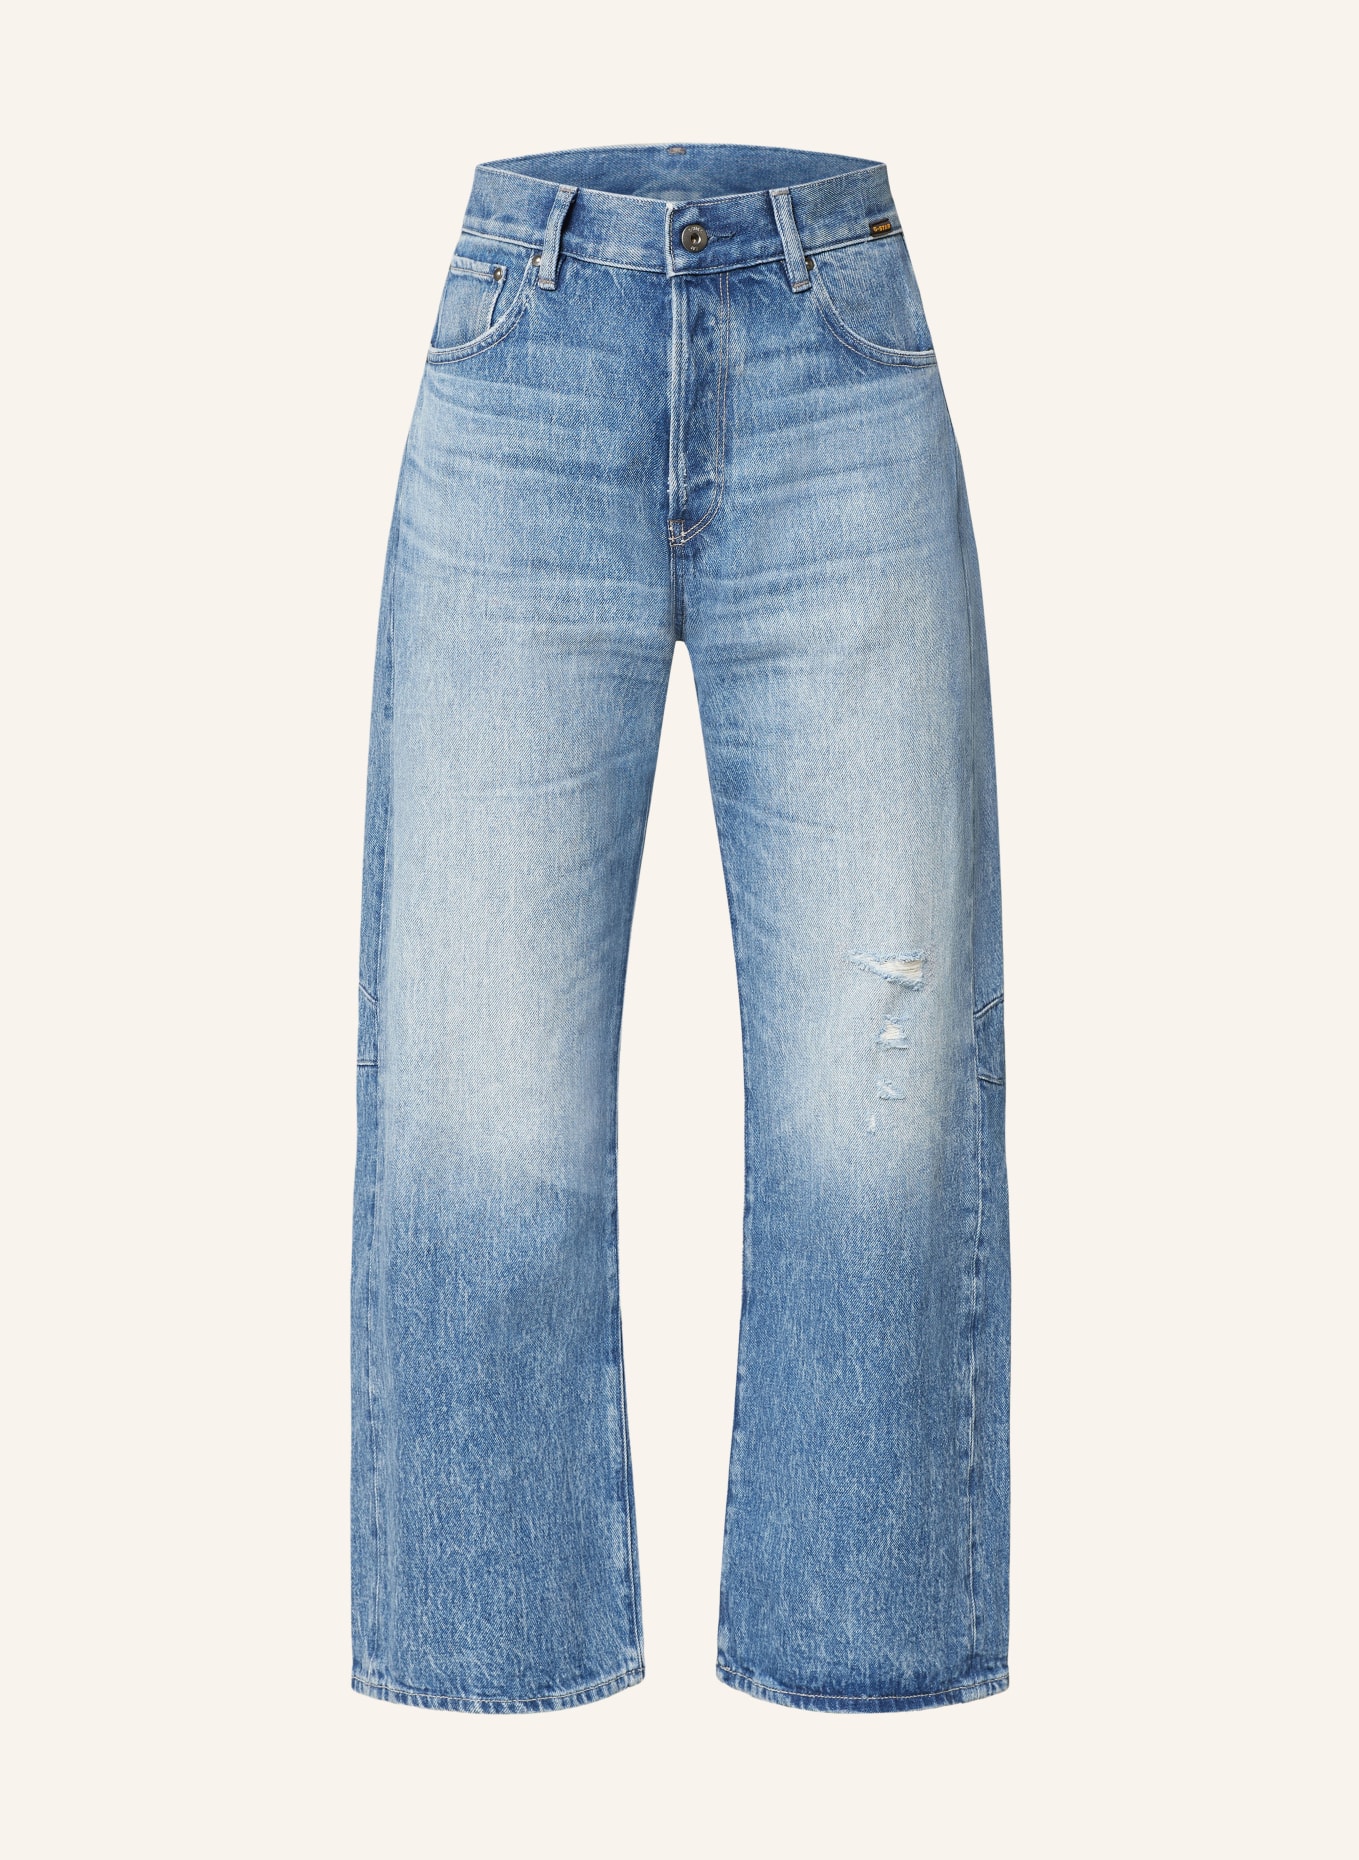 G-Star RAW Boyfriend Jeans BOWEY 3D, Farbe: G670 sun faded ripped blue donau (Bild 1)